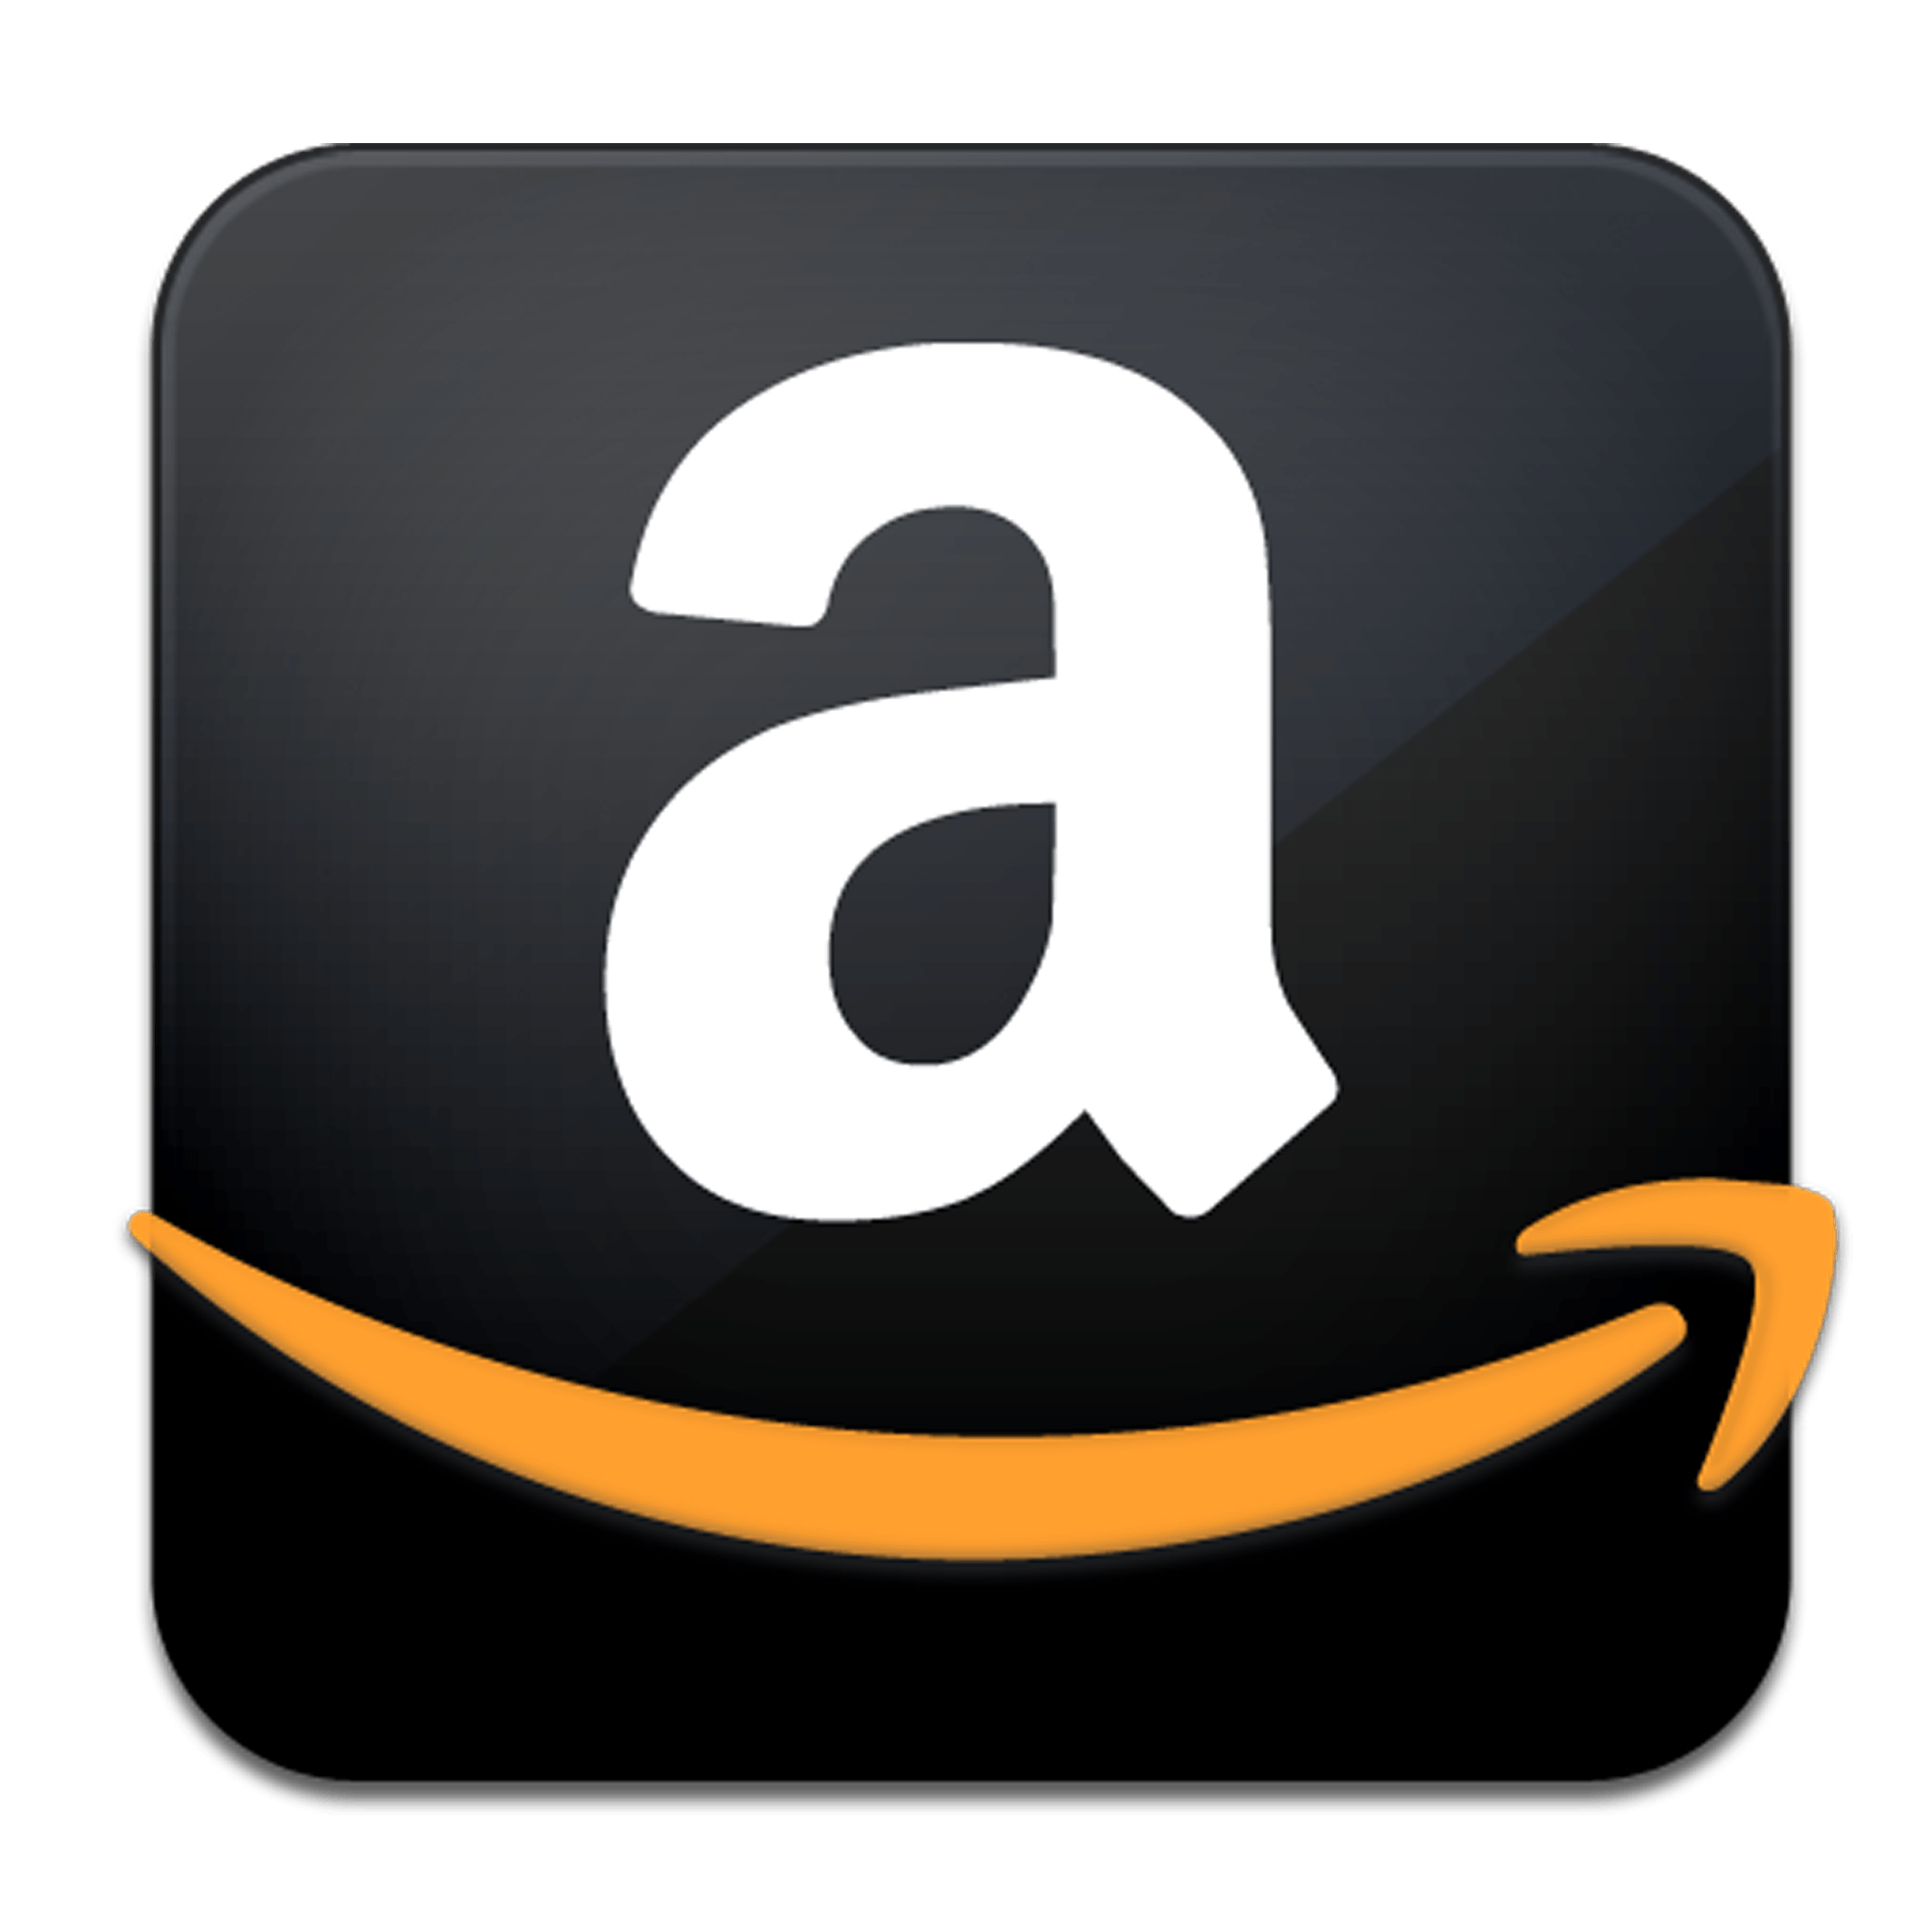 Amazon Mobile App Logo - Amazon app Logos